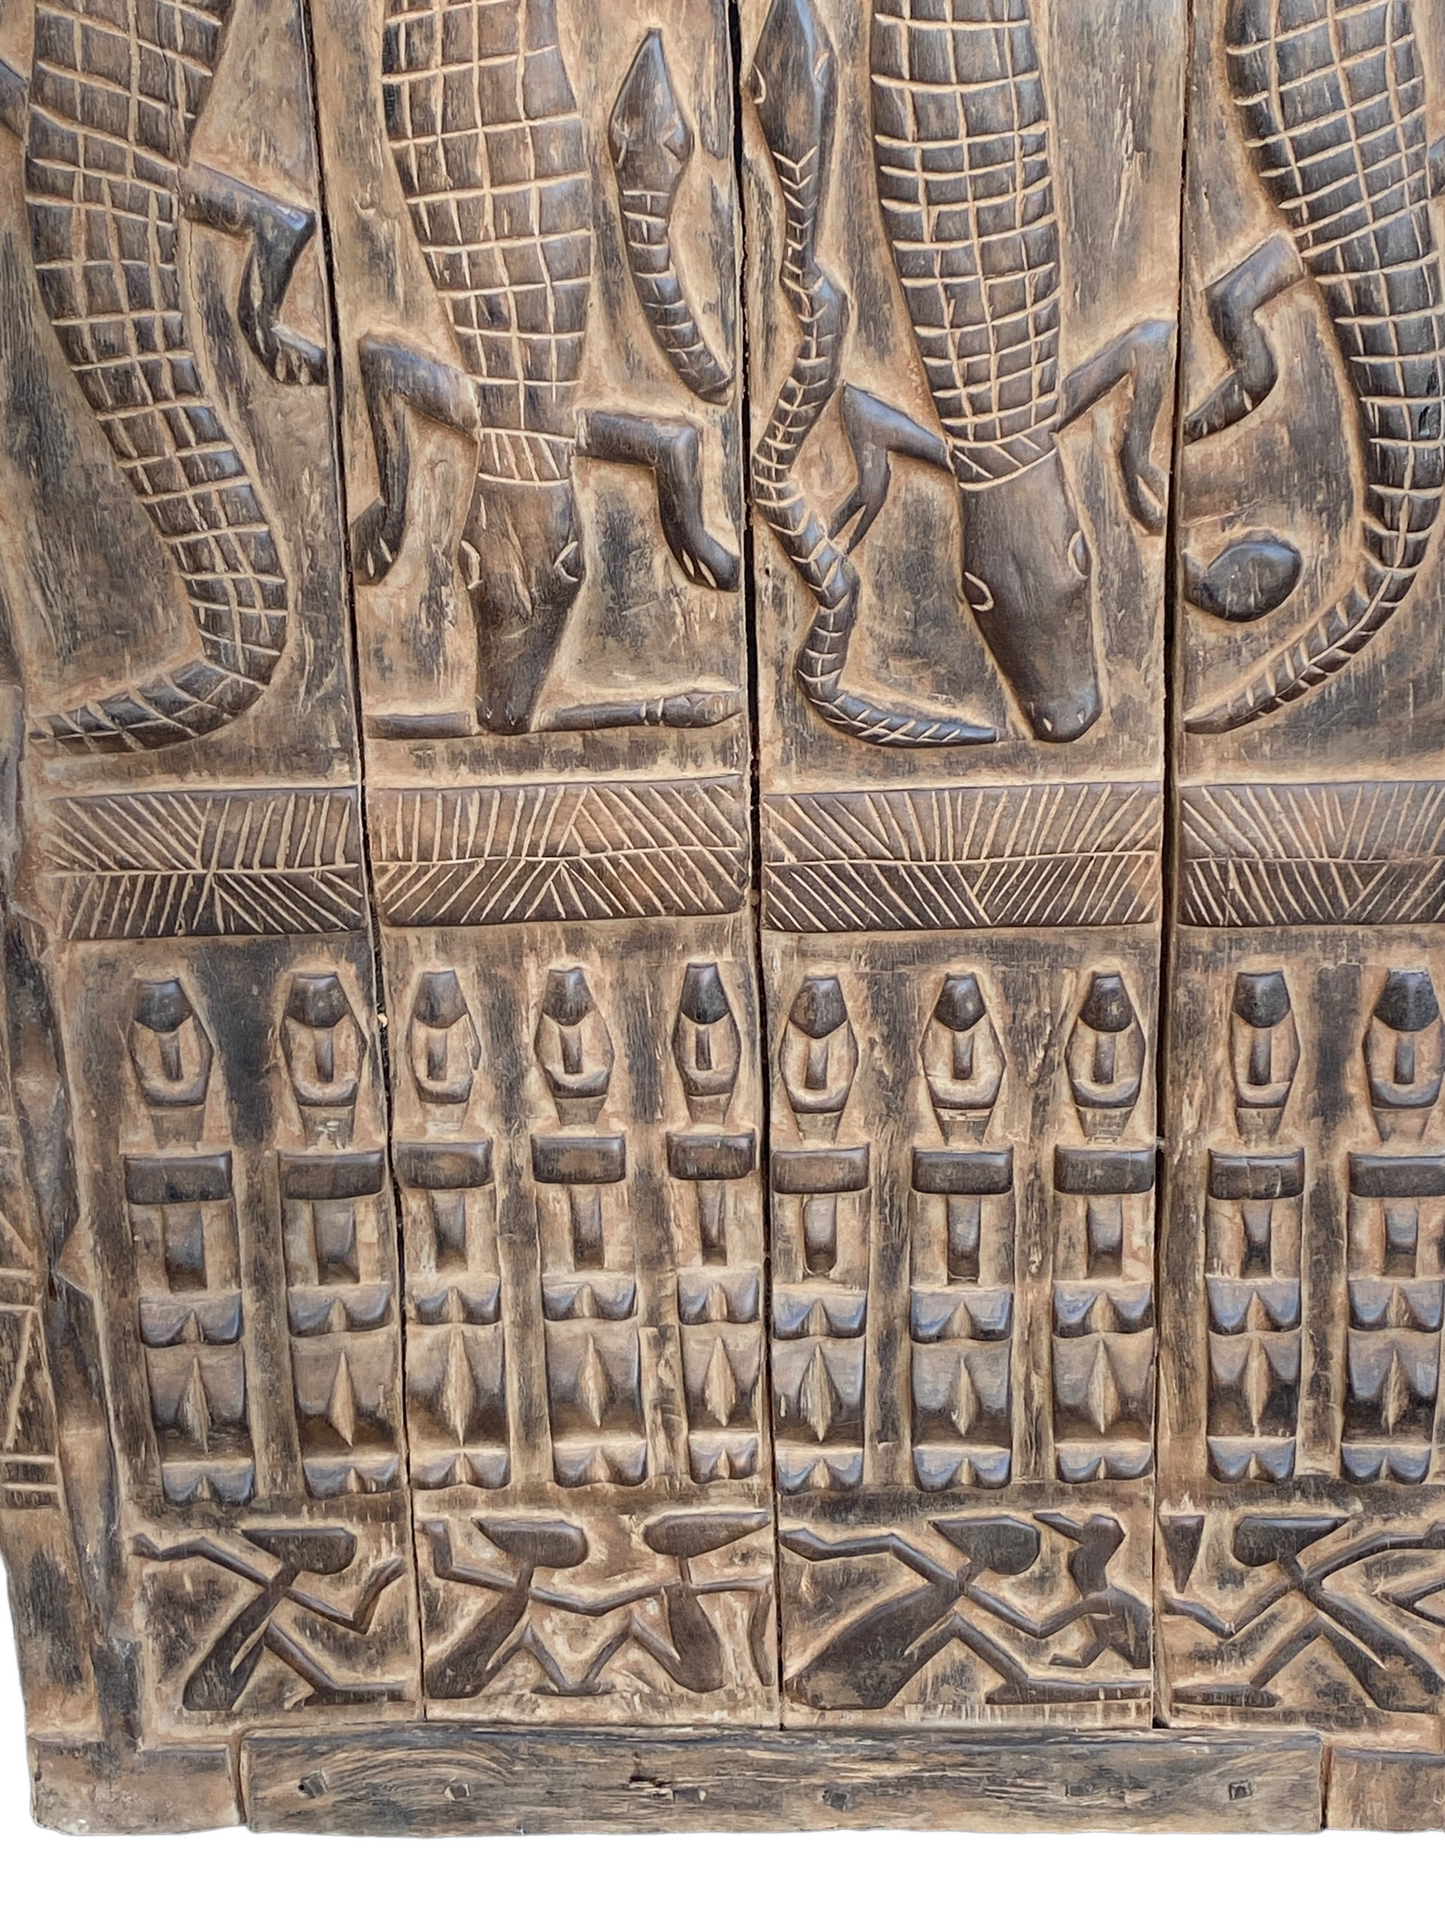 # 5111 Superb Large Dogon Door w/Crocodiles/Ancestors Mali African 71" H